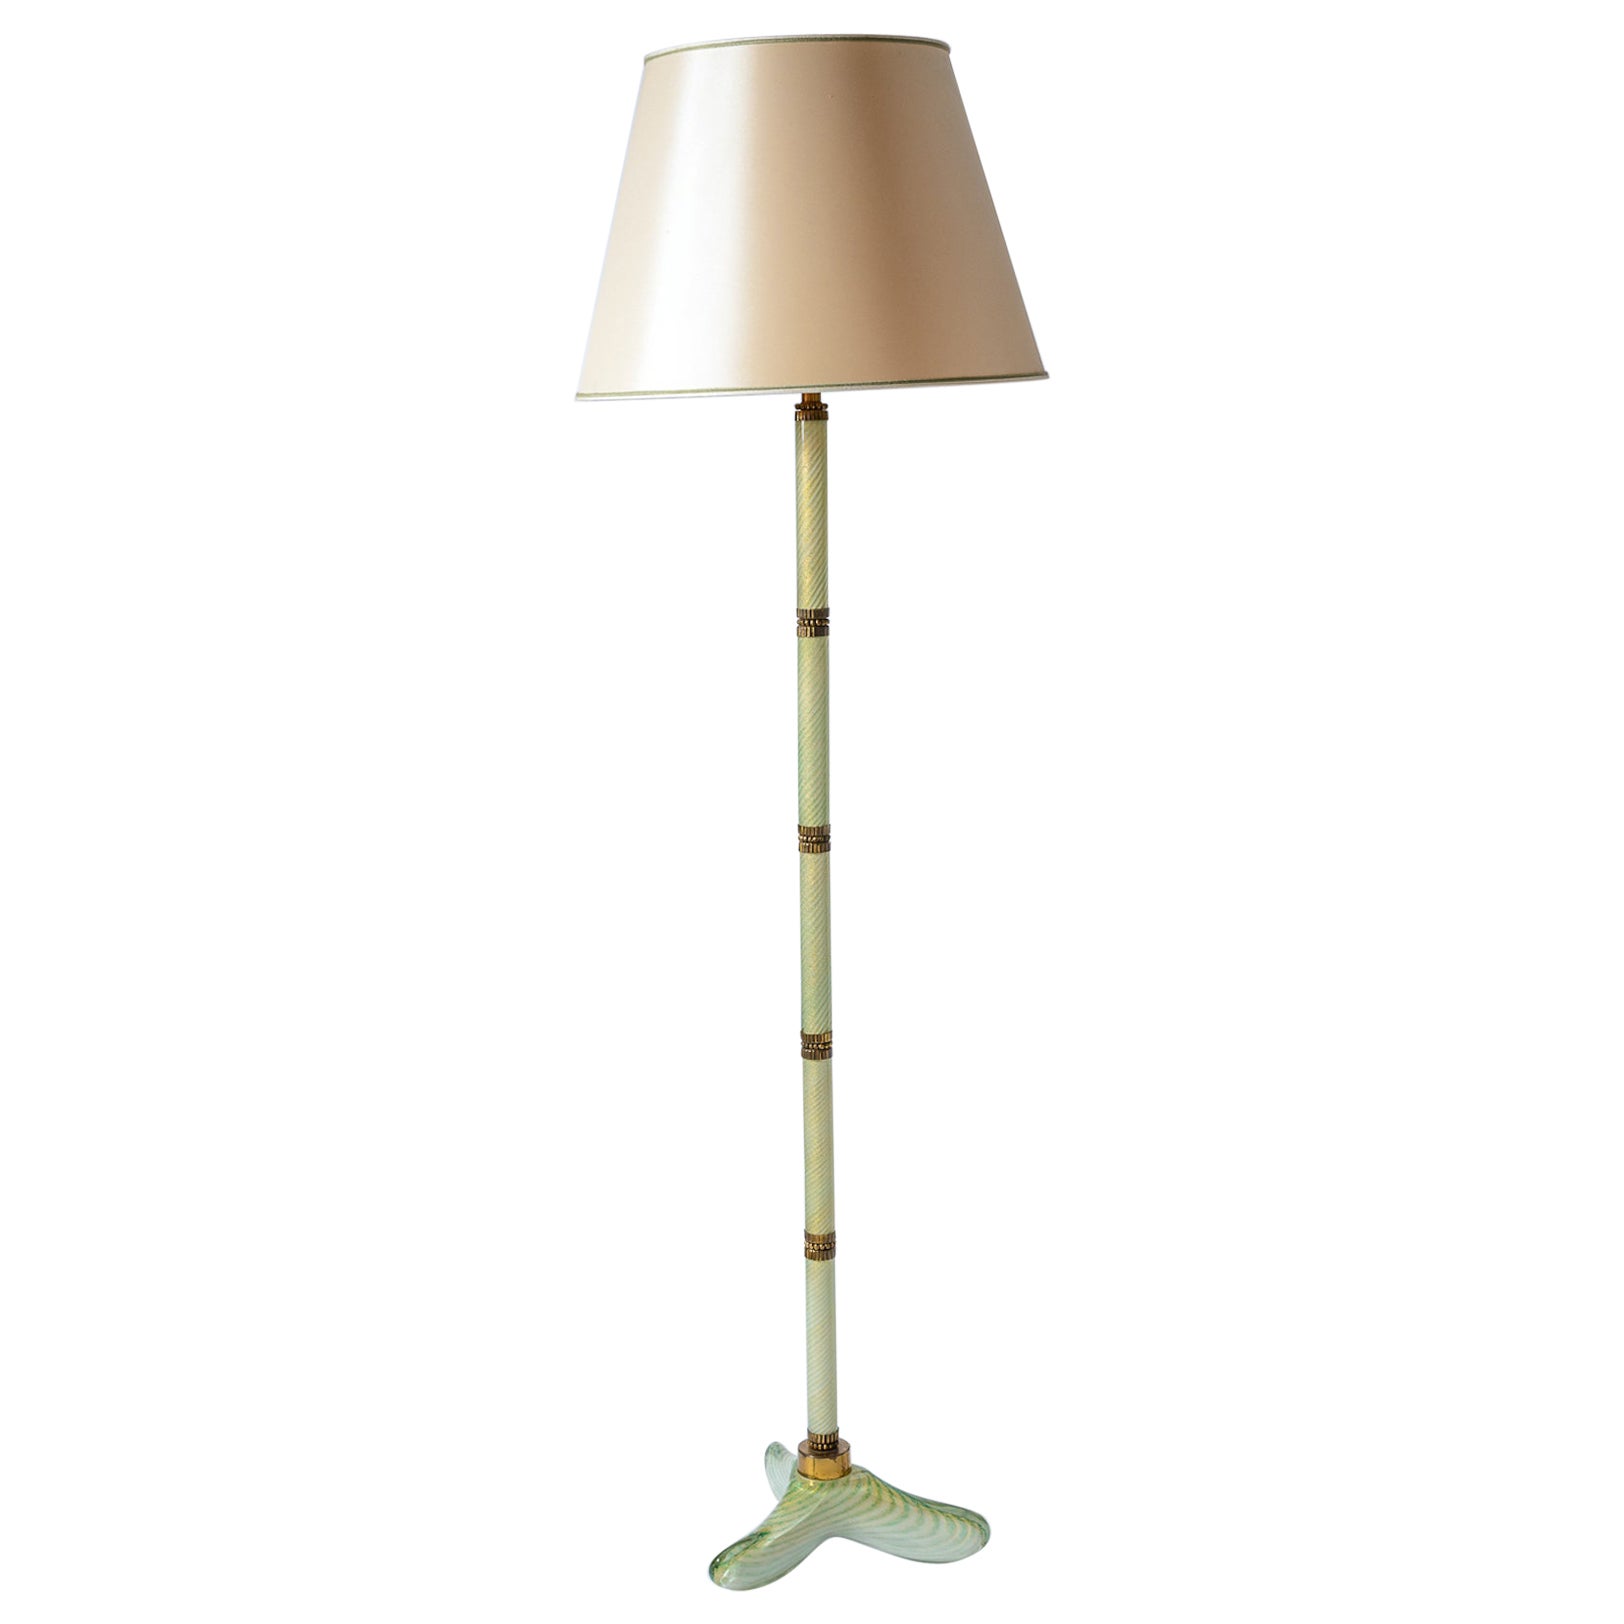 Murano Floor Lamp Attributed To Seguso